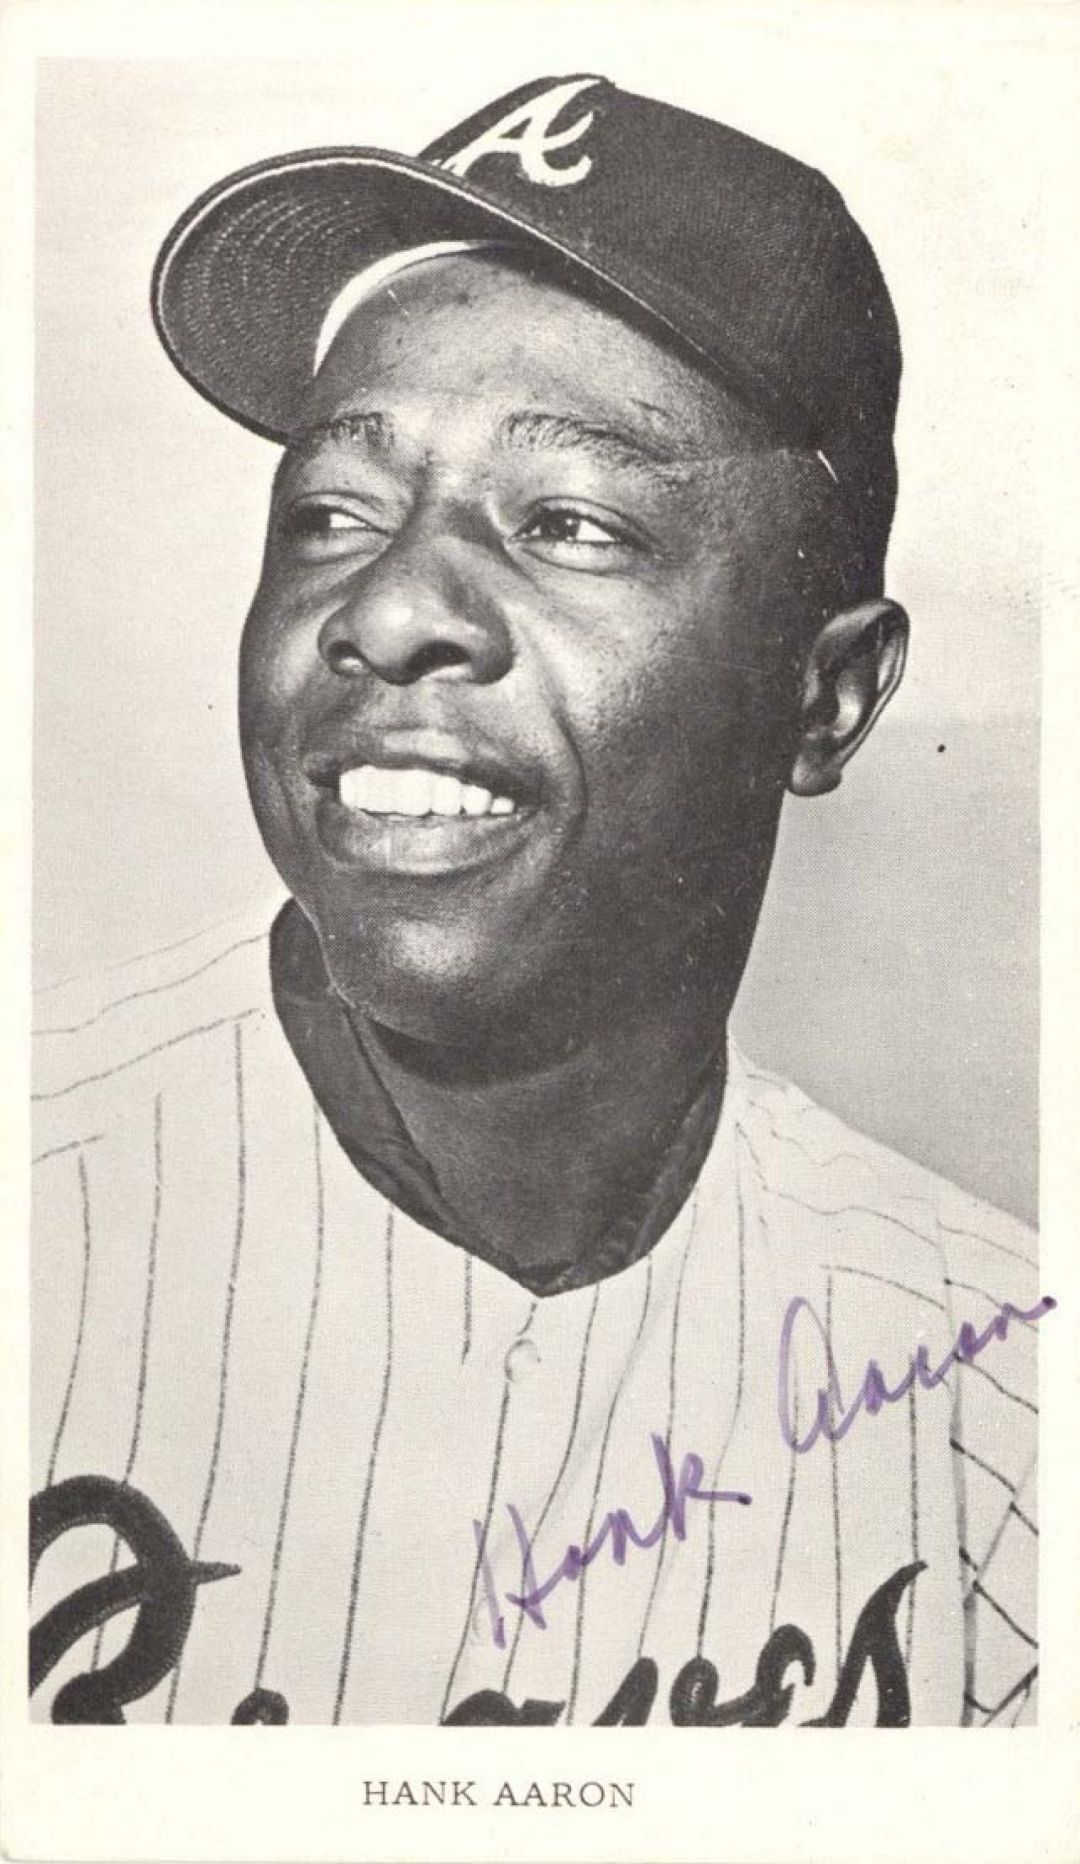 Hank Aaron Signed Photo - Autograph - Baseball Hall of Famer